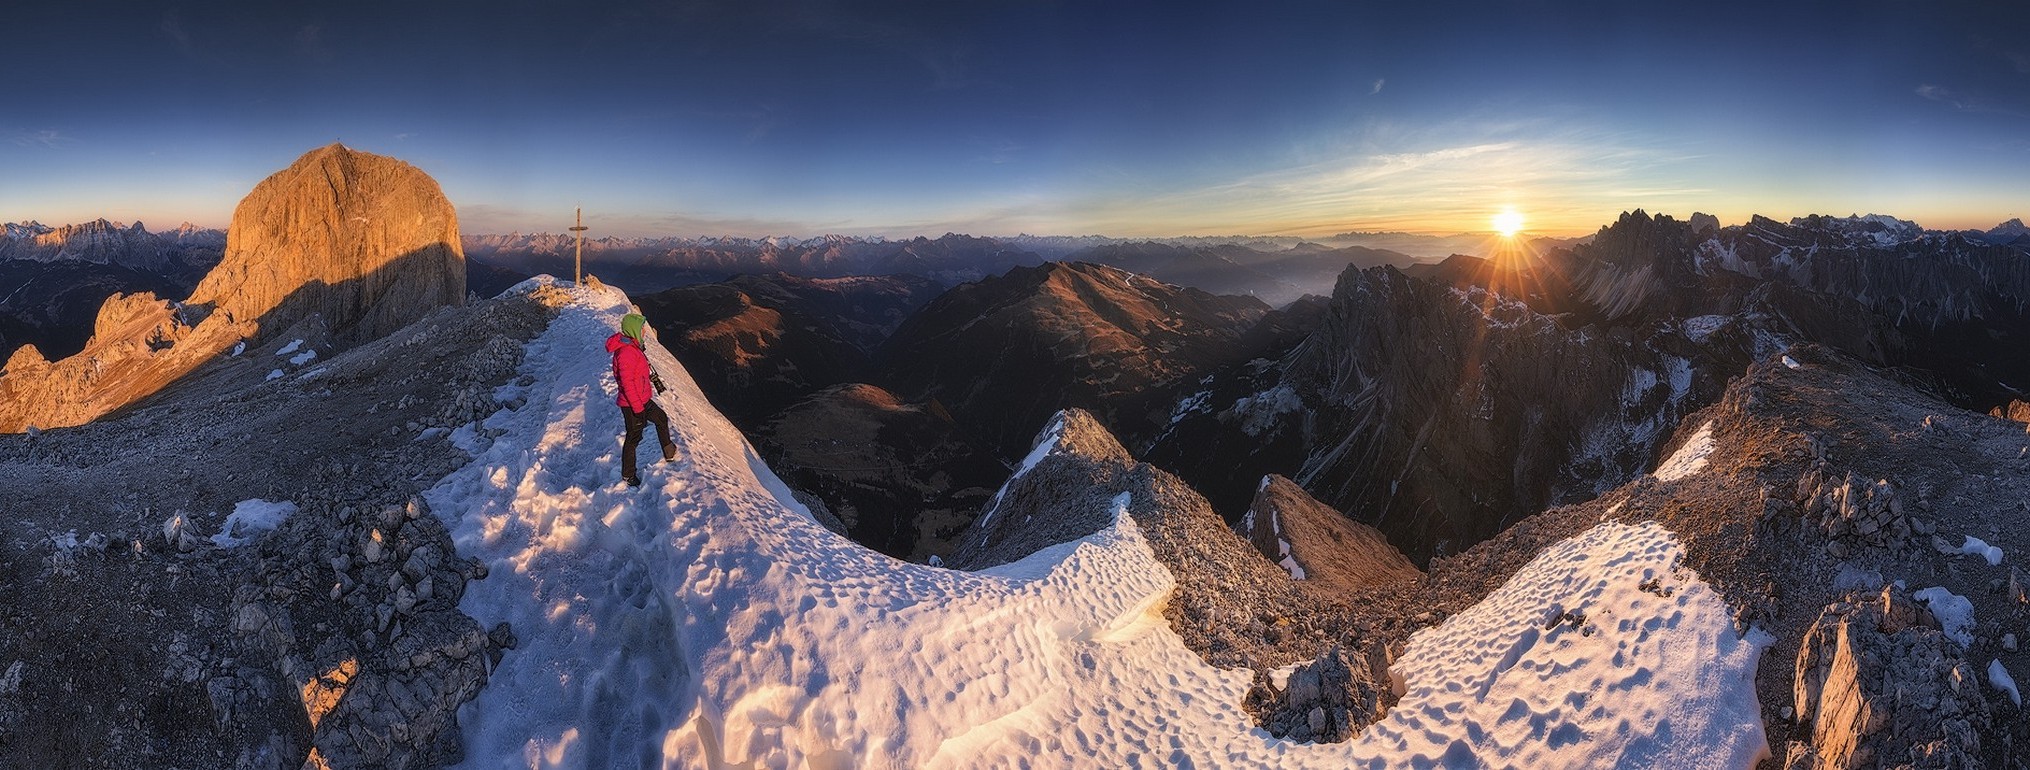 landscape, Nature, Dolomites (mountains), Sunset, Panoramas, Snow, Summit, Cross, Hiking, Winter, Italy Wallpaper